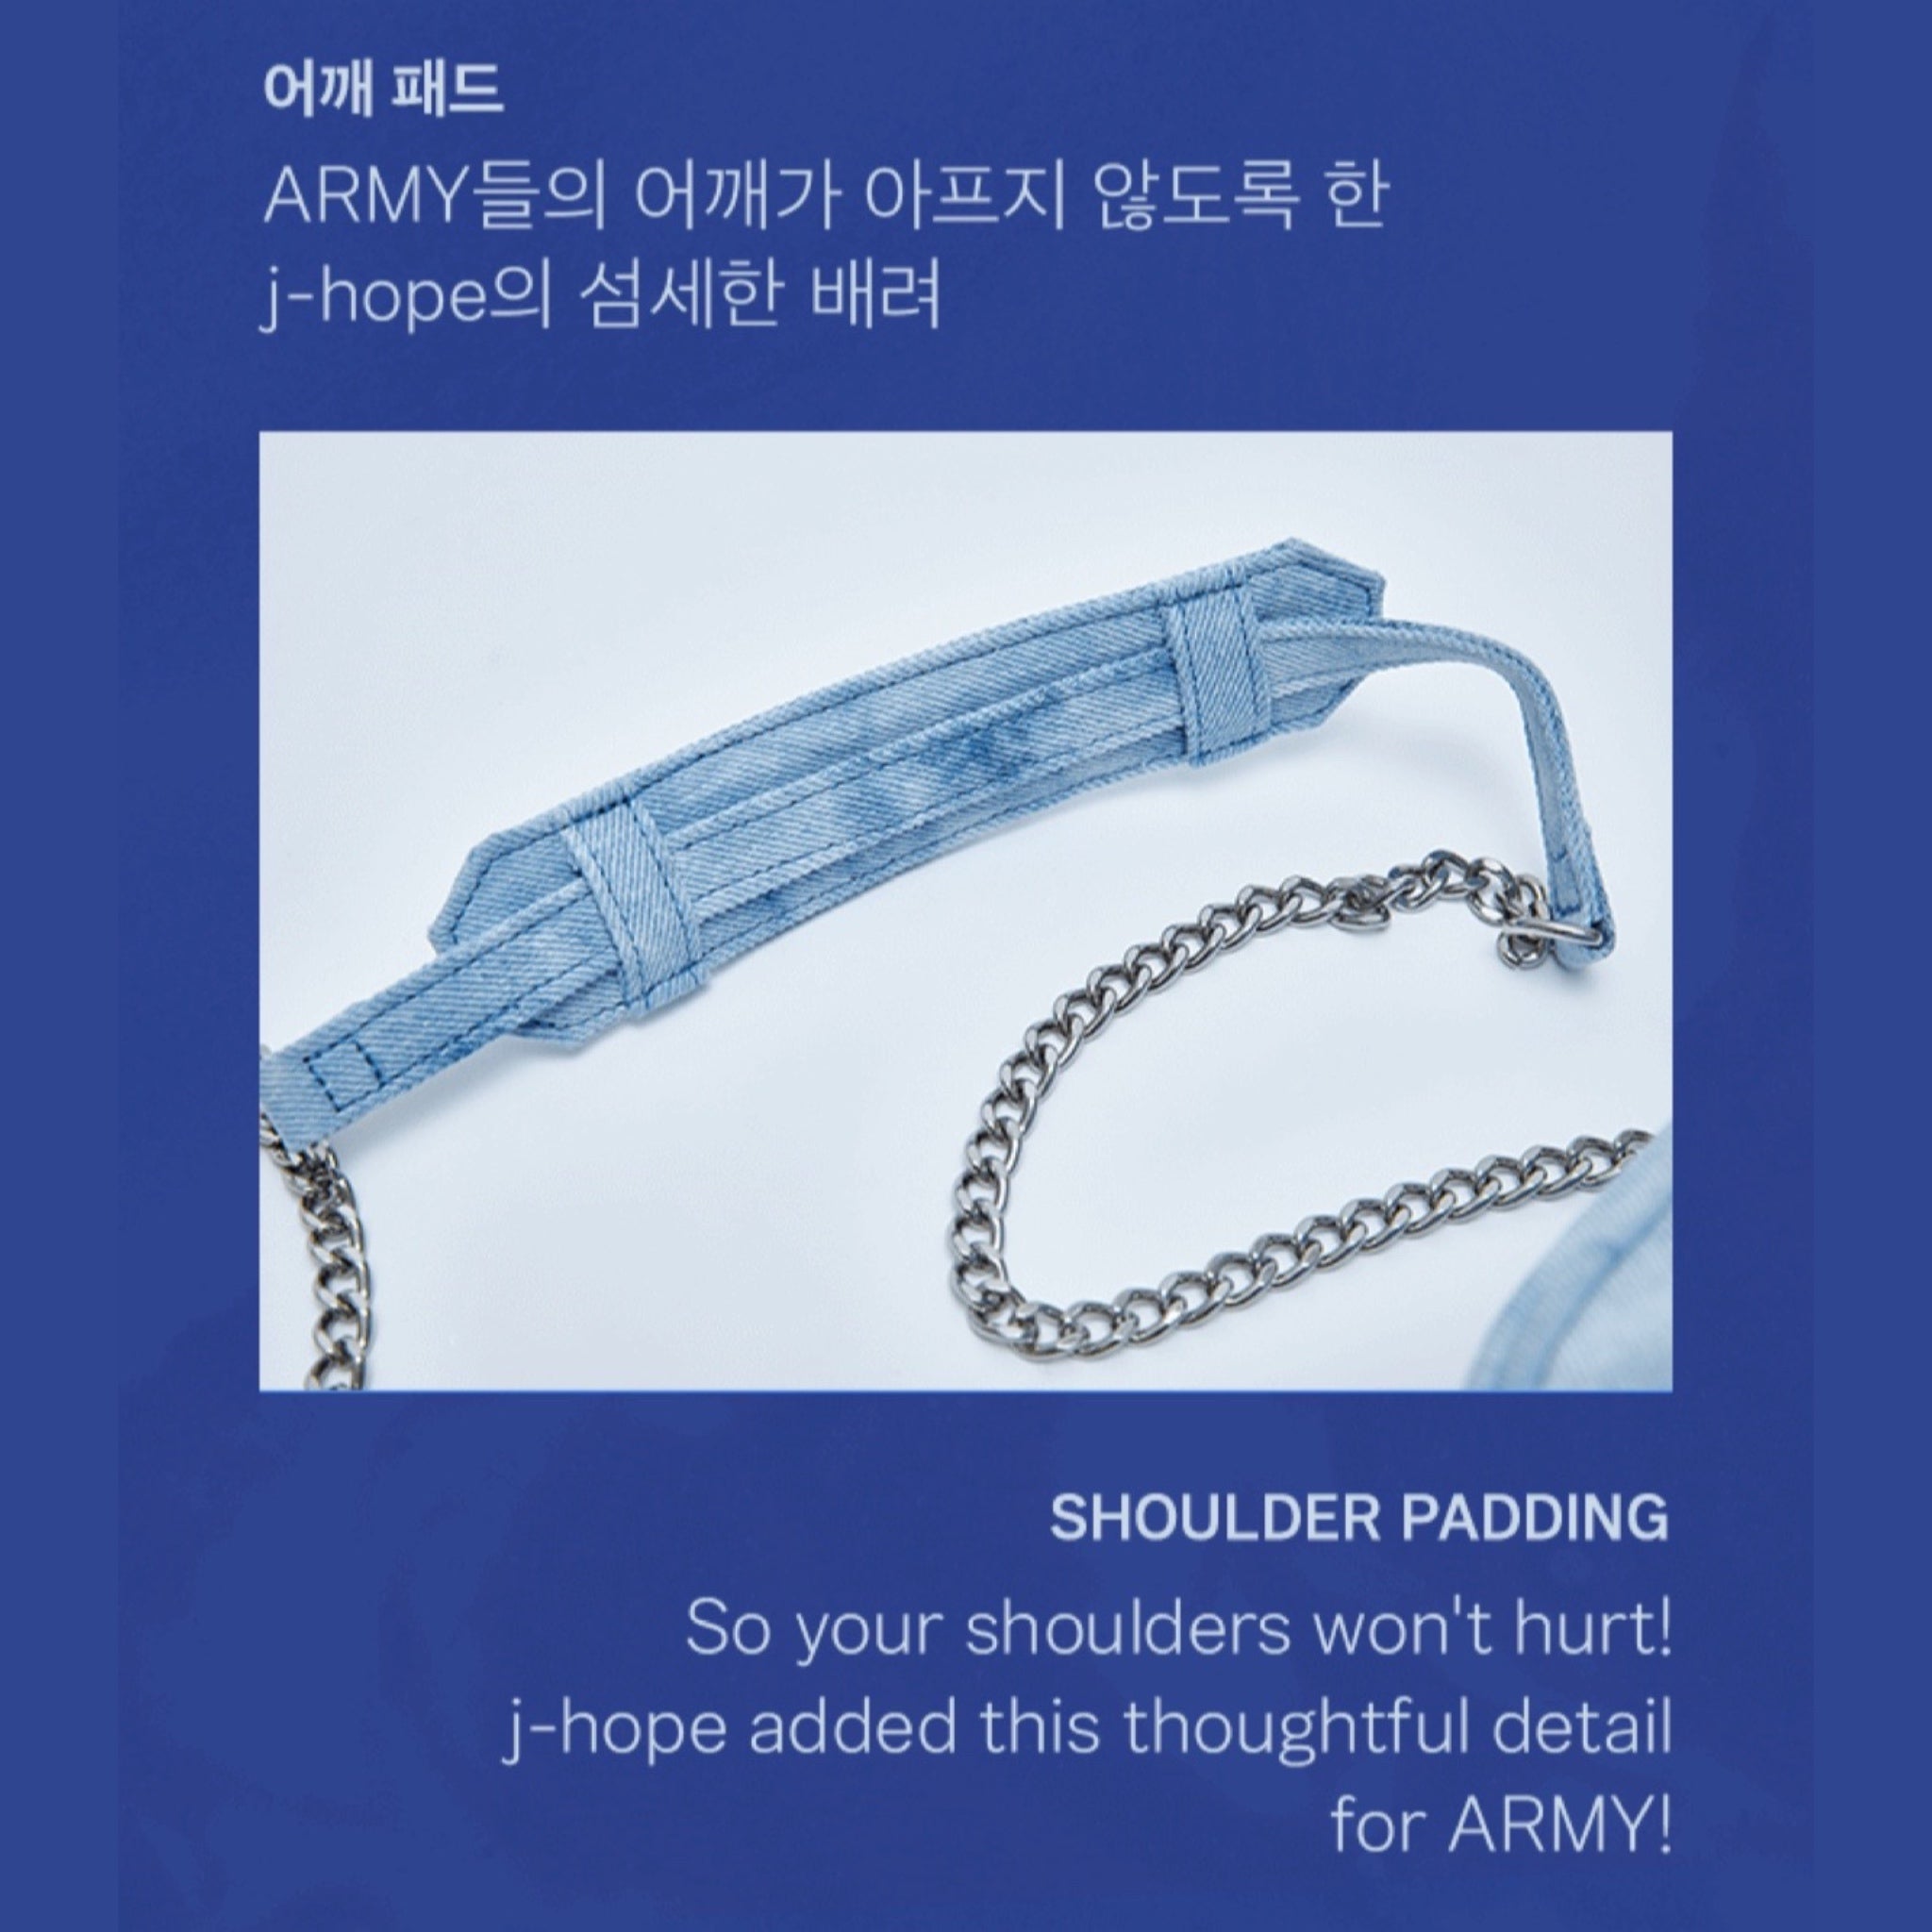 j-hope] Side by Side Mini Bag